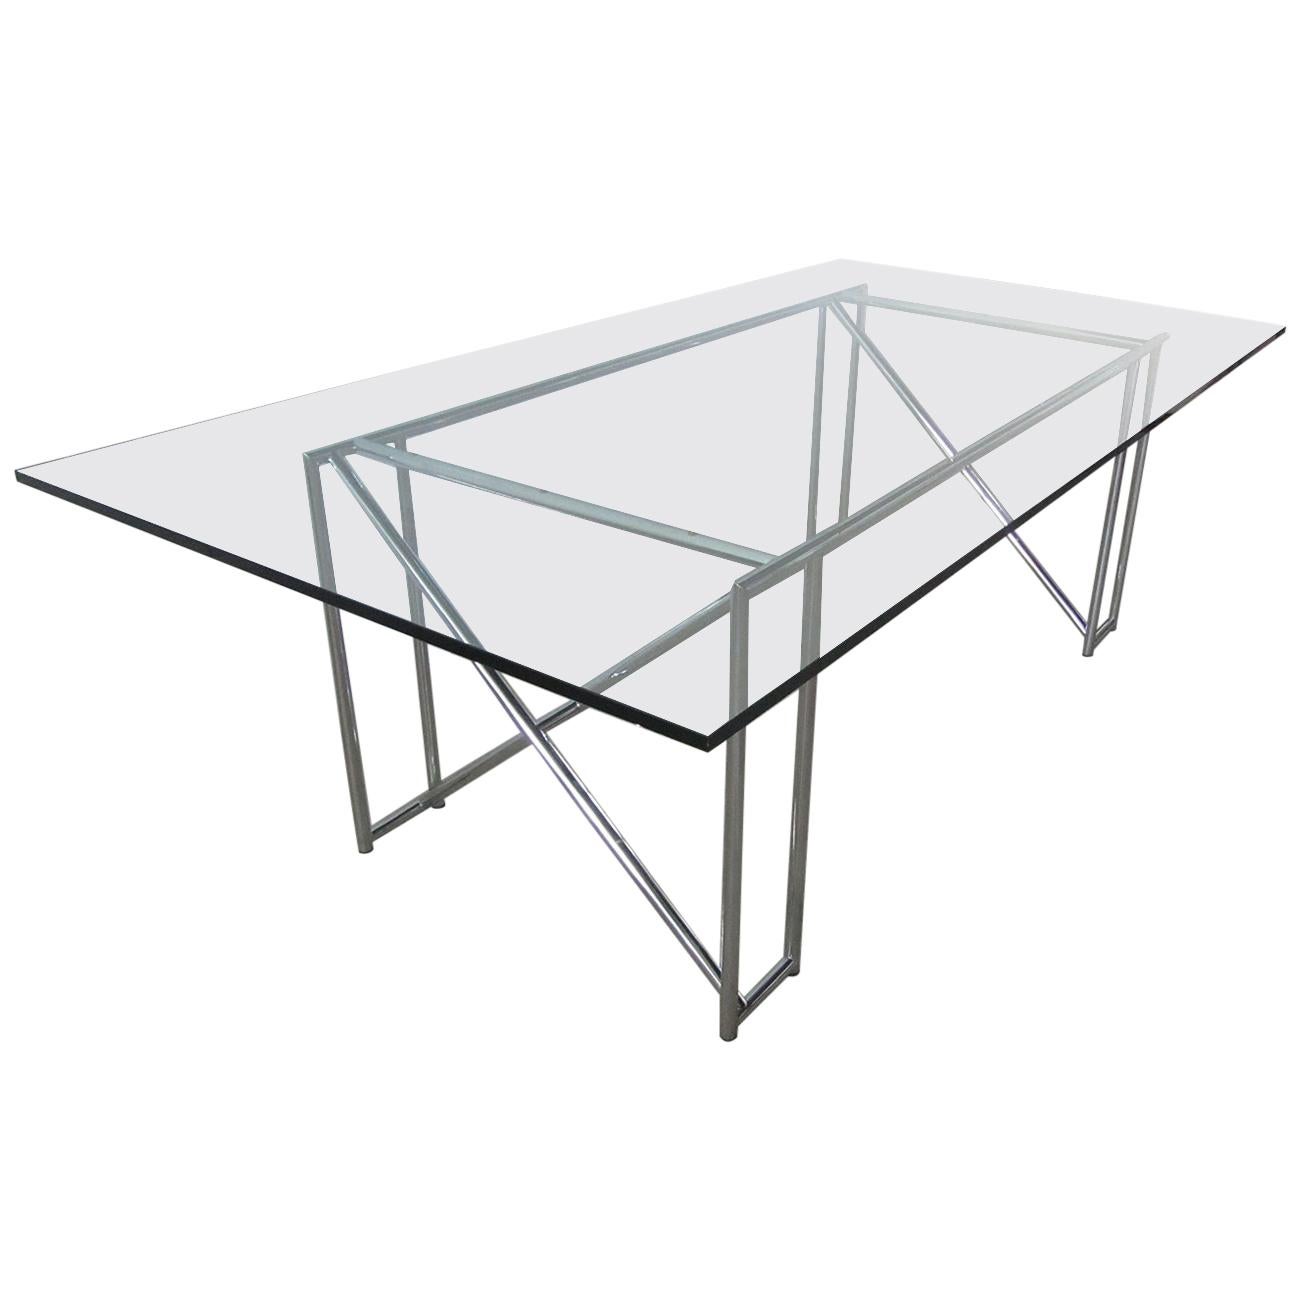 Original German Modern Chrome Double X Table, Eileen Gray For Sale